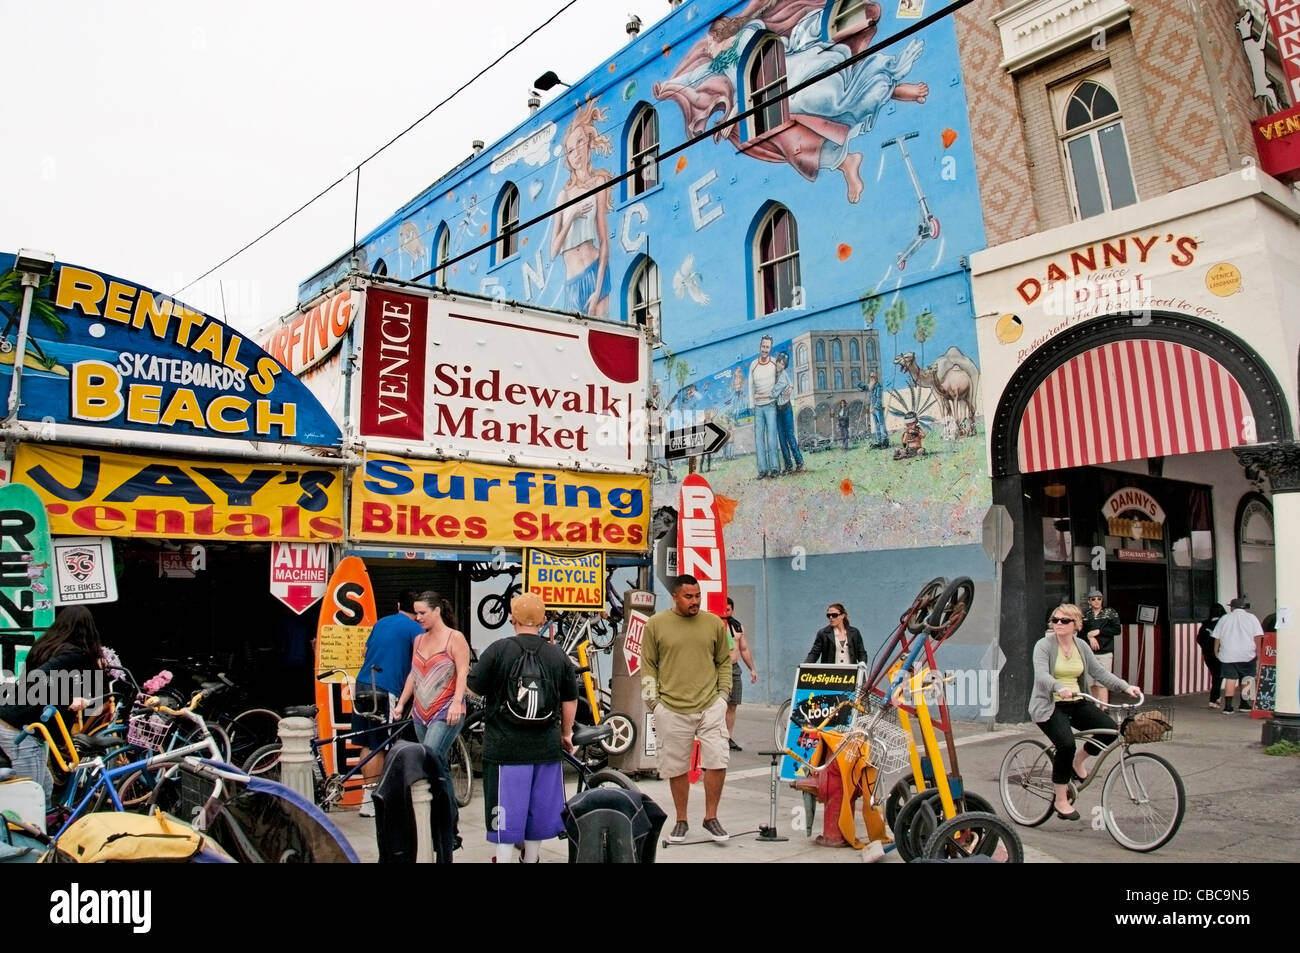 Venice Beach California  Rental Furfing Bikes Skates United States Los Angeles Stock Photo